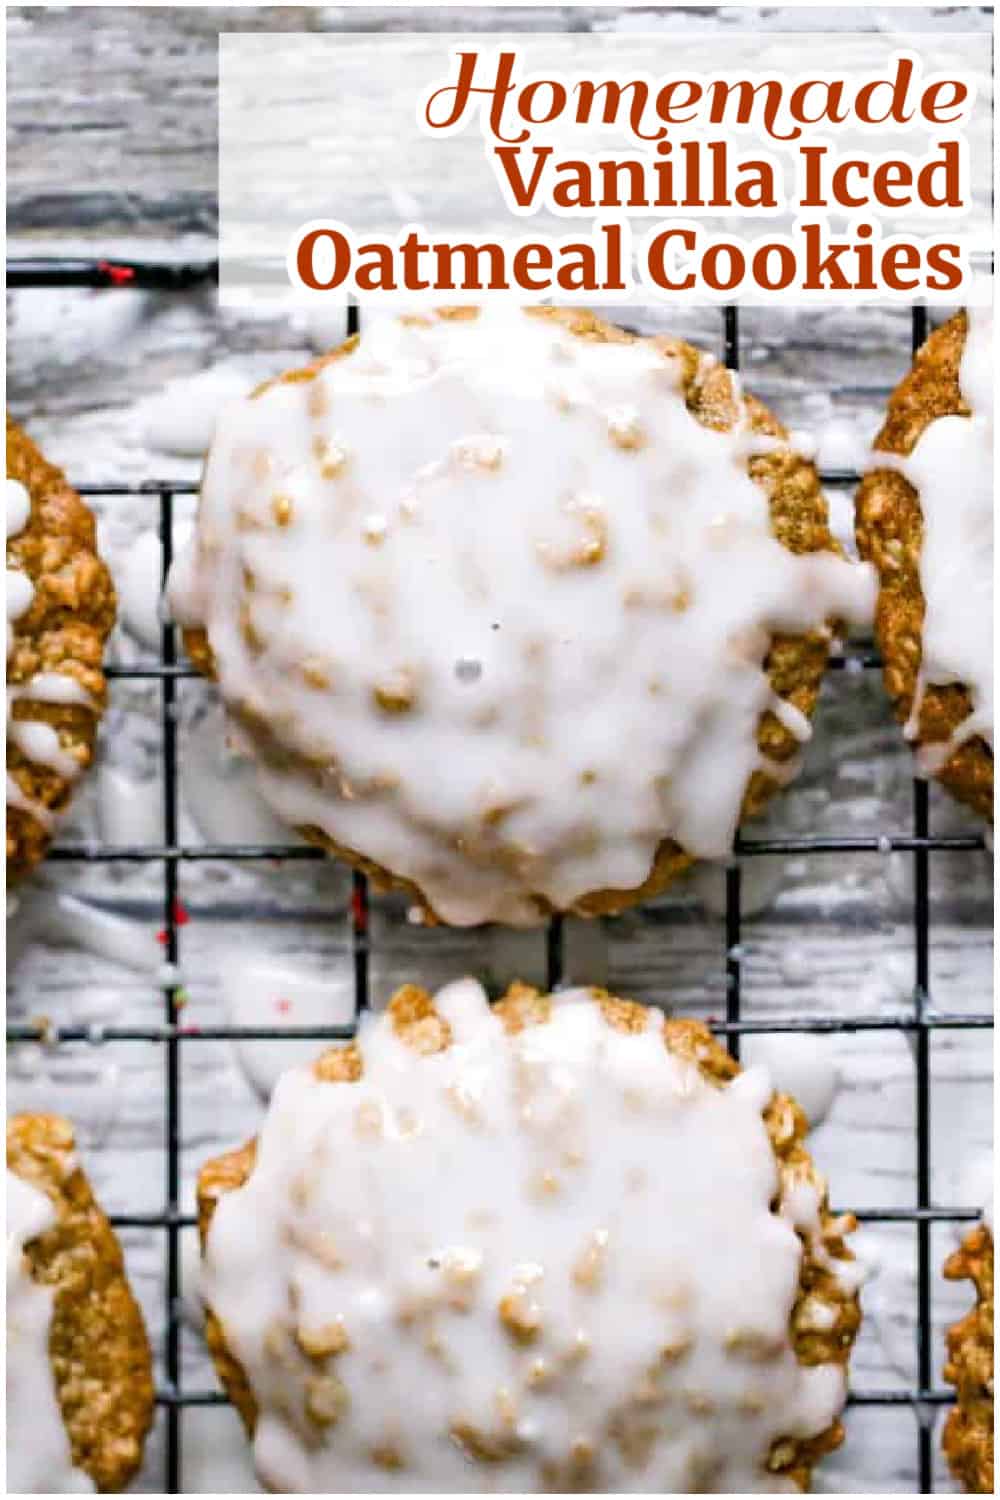 Vanilla Iced Oatmeal Cookies recipe